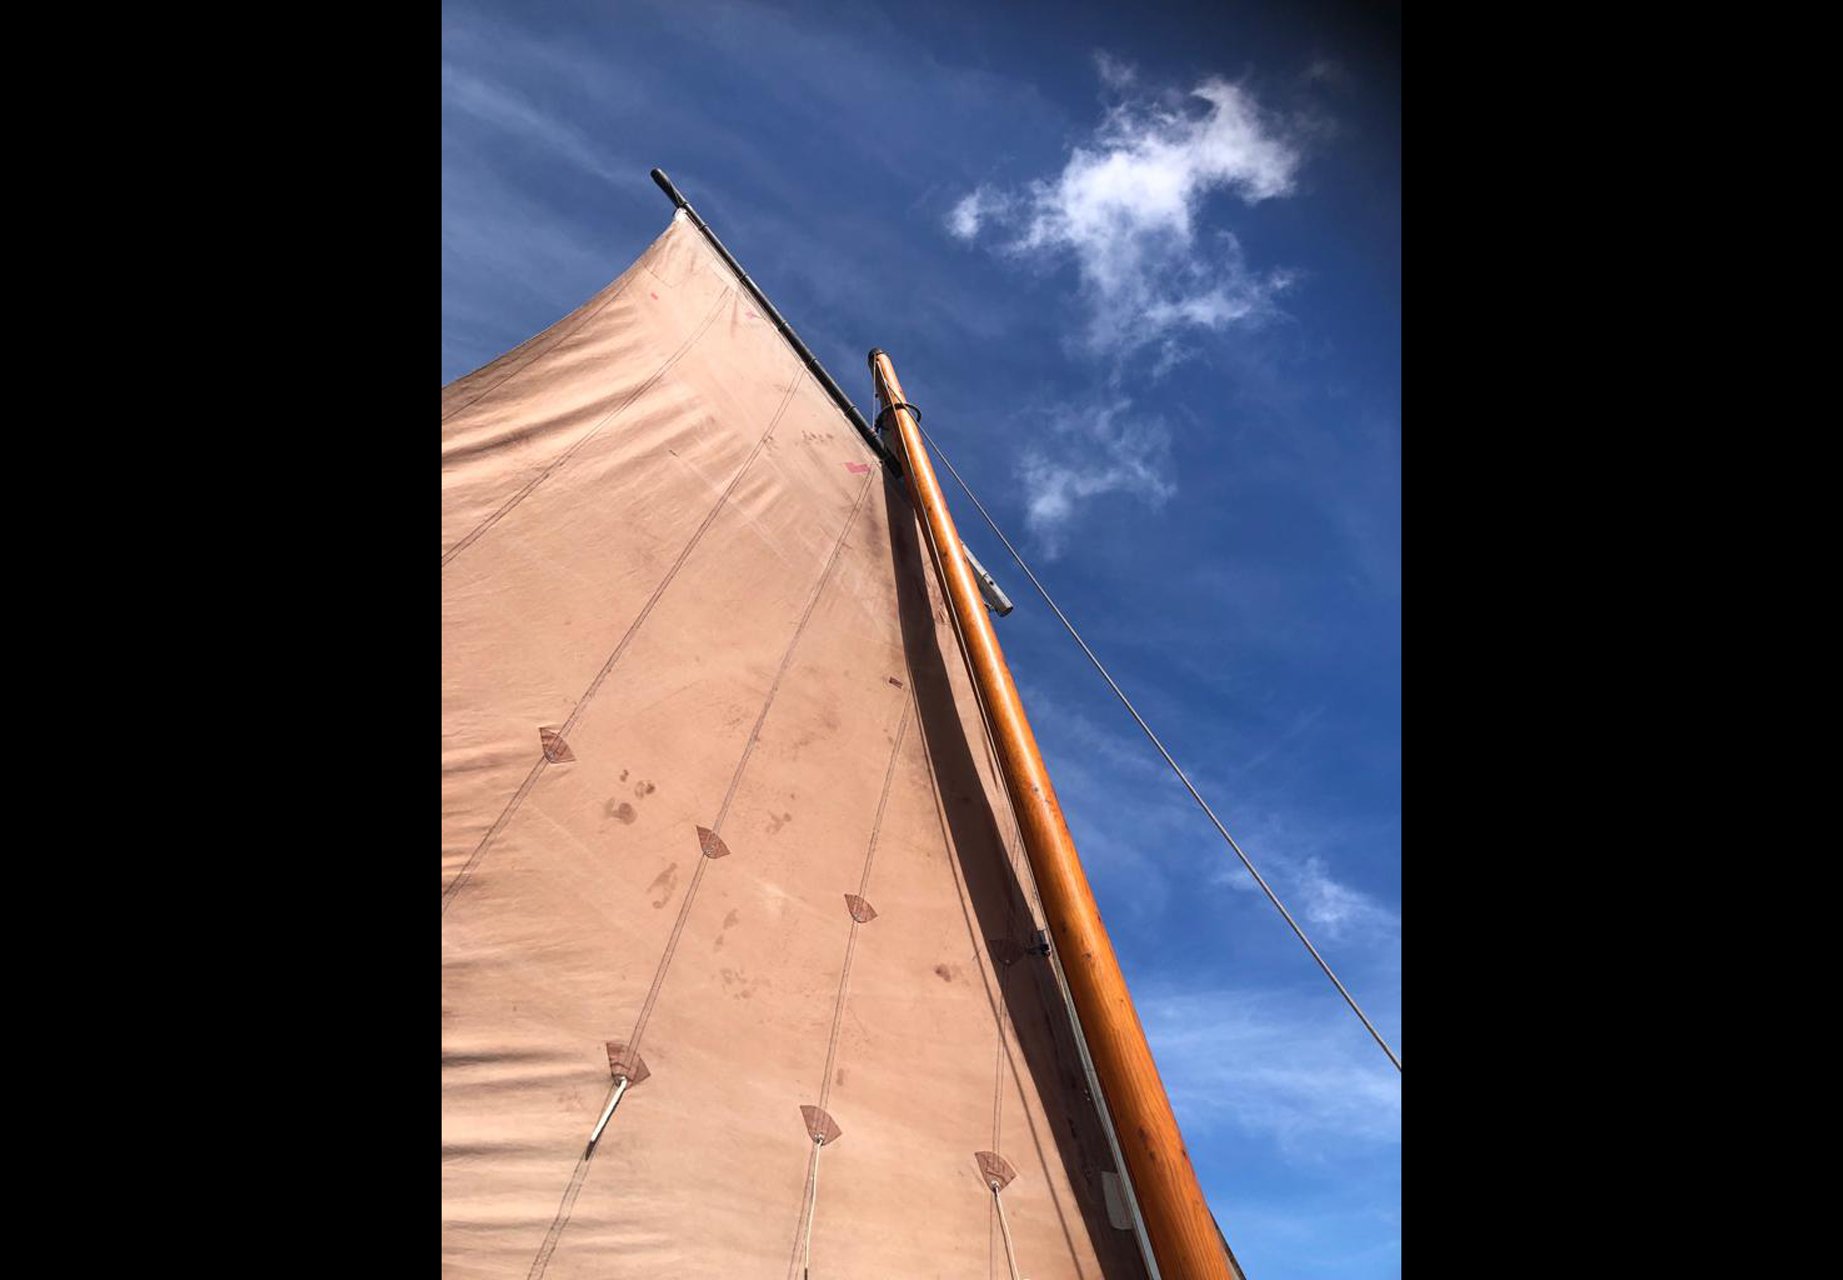 Lugg sail on the Eleanor B